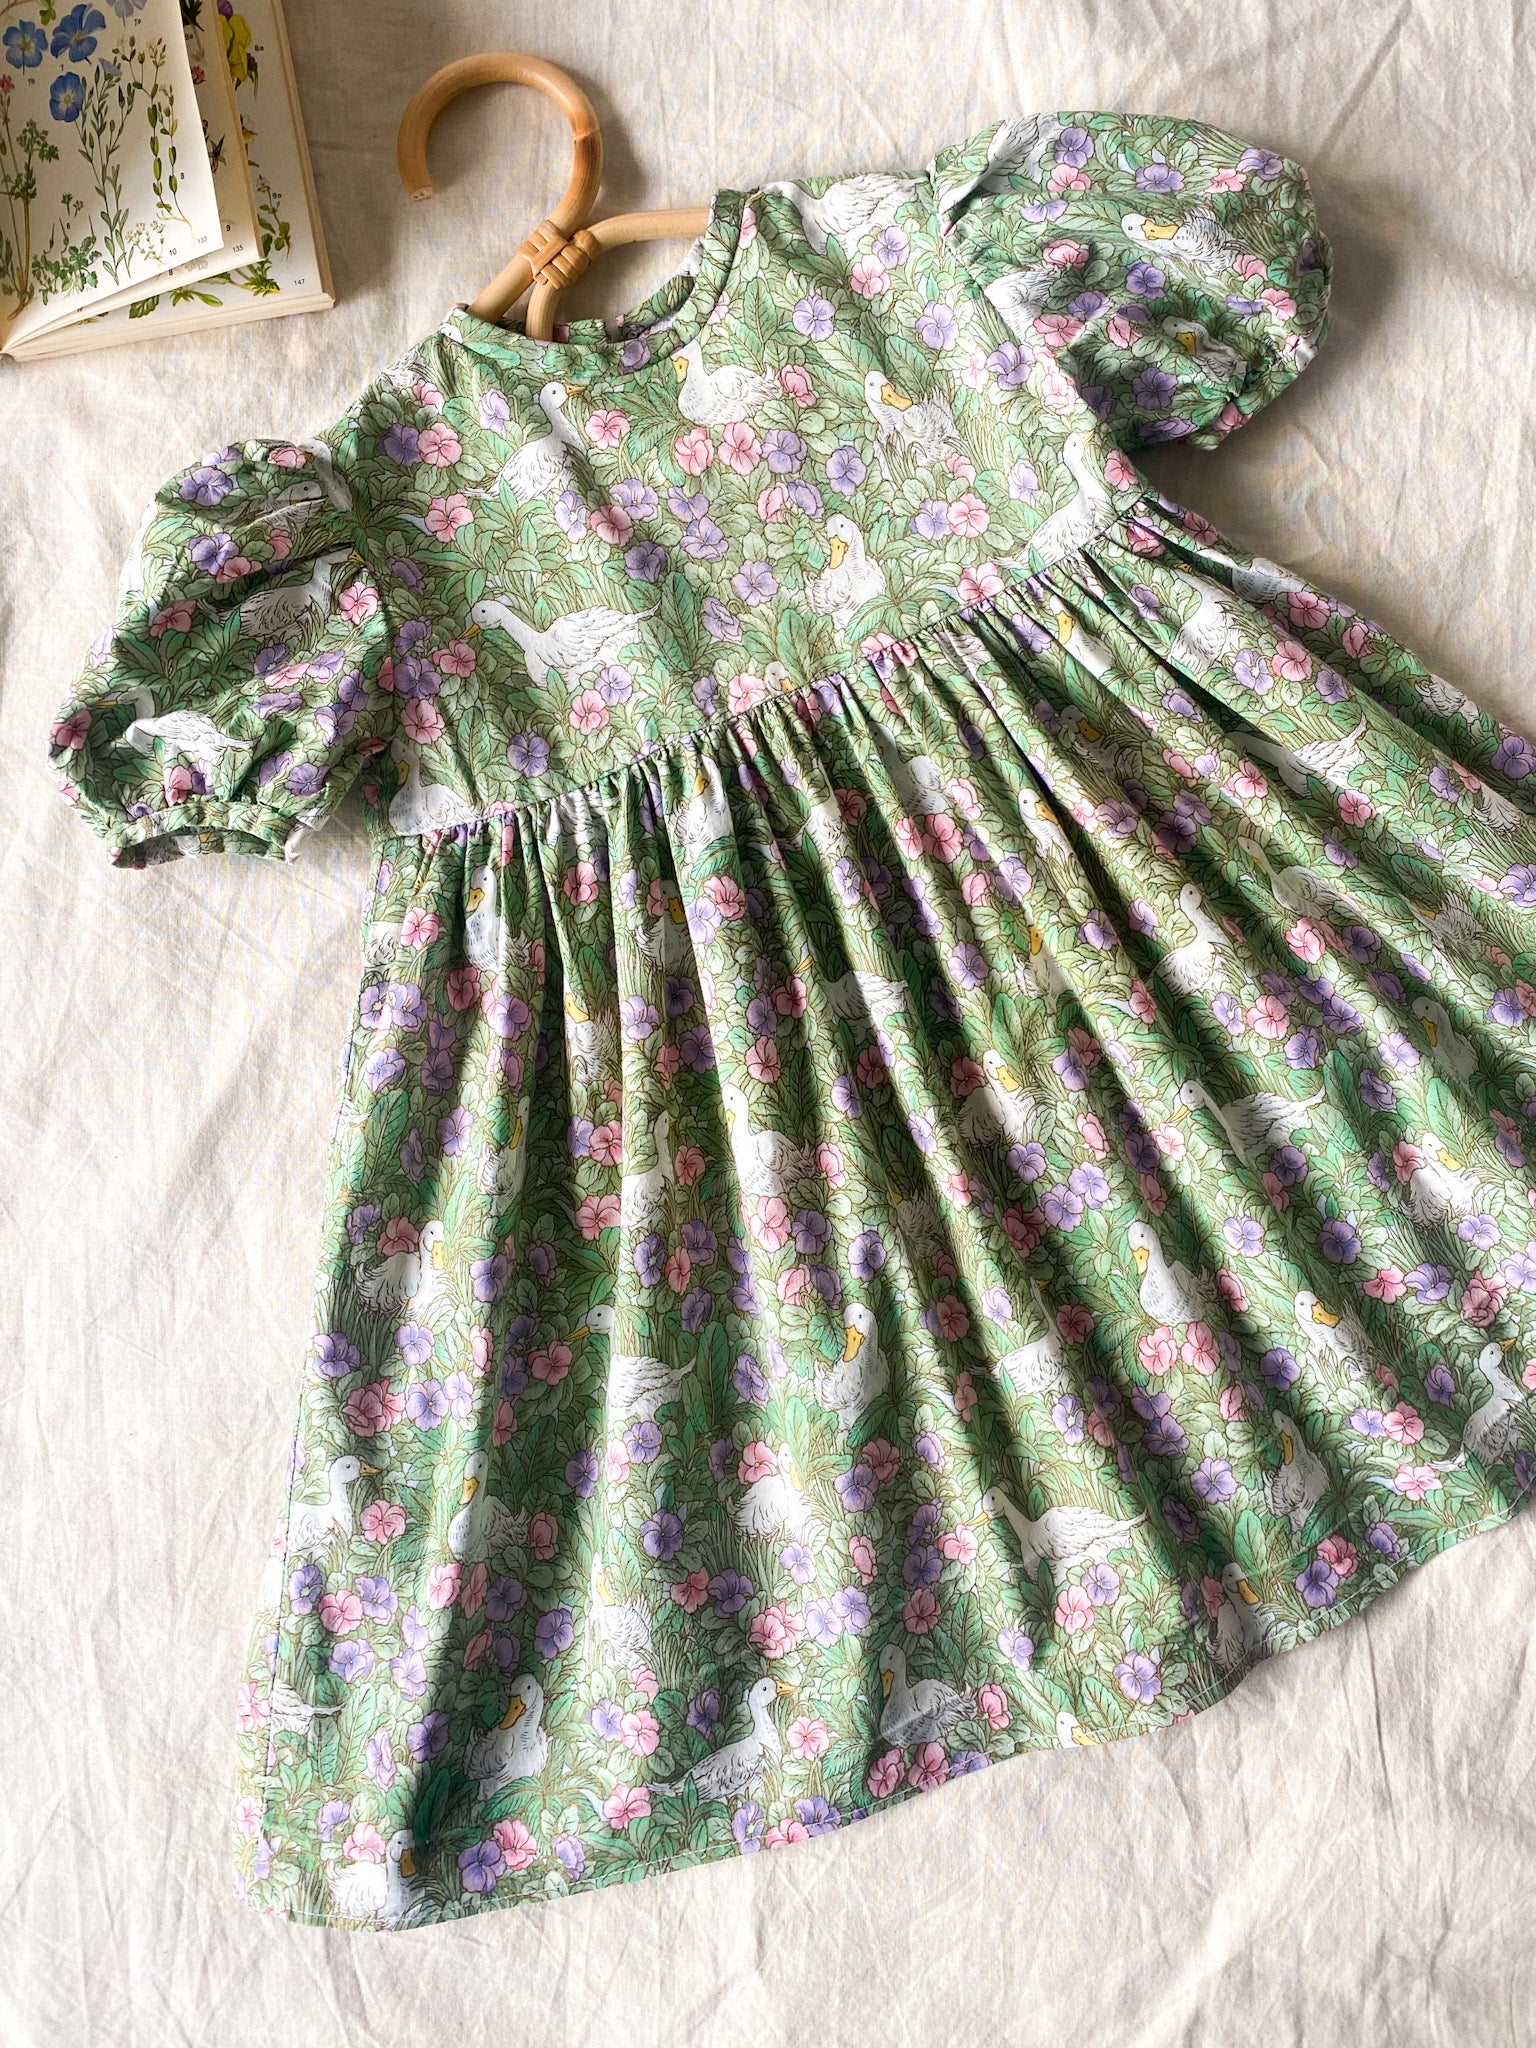 Vintage Handmade Flower & Goose Print Dress, approx 2-3.5 years